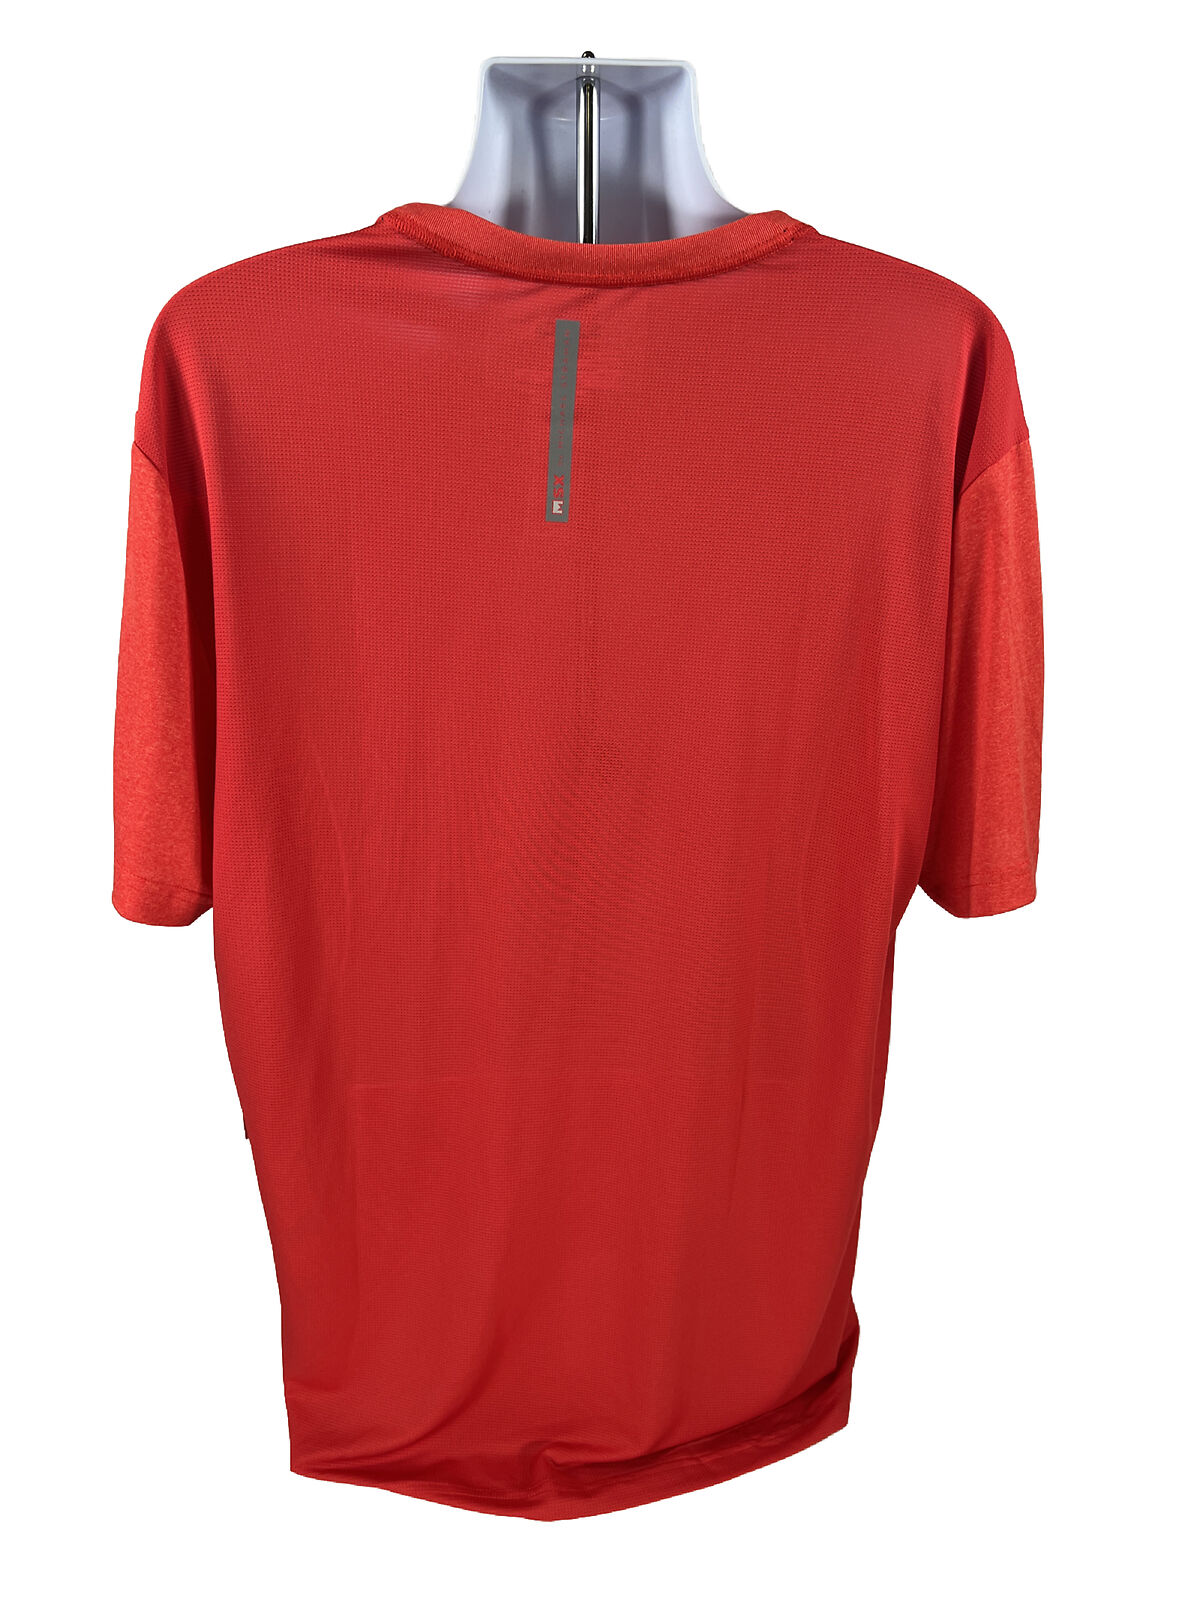 NUEVA camiseta deportiva de manga corta roja MSX Michael Strahan para hombre - Tall XLT